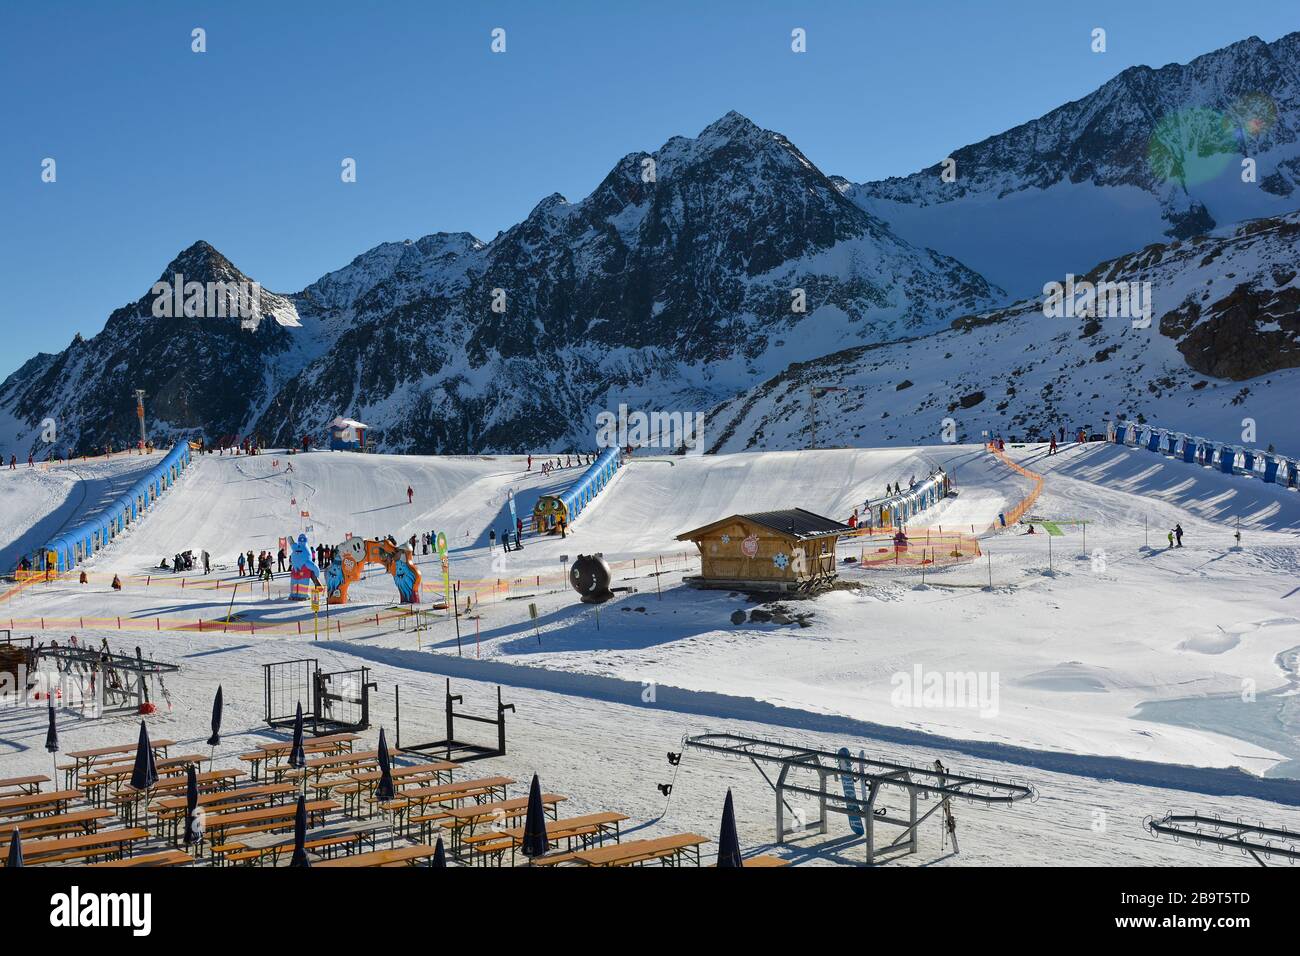 Stubai, Austria - December 23rd 2015: Unidentified people on practice slope with children lift on ski resort Stubaier glacier Stock Photo